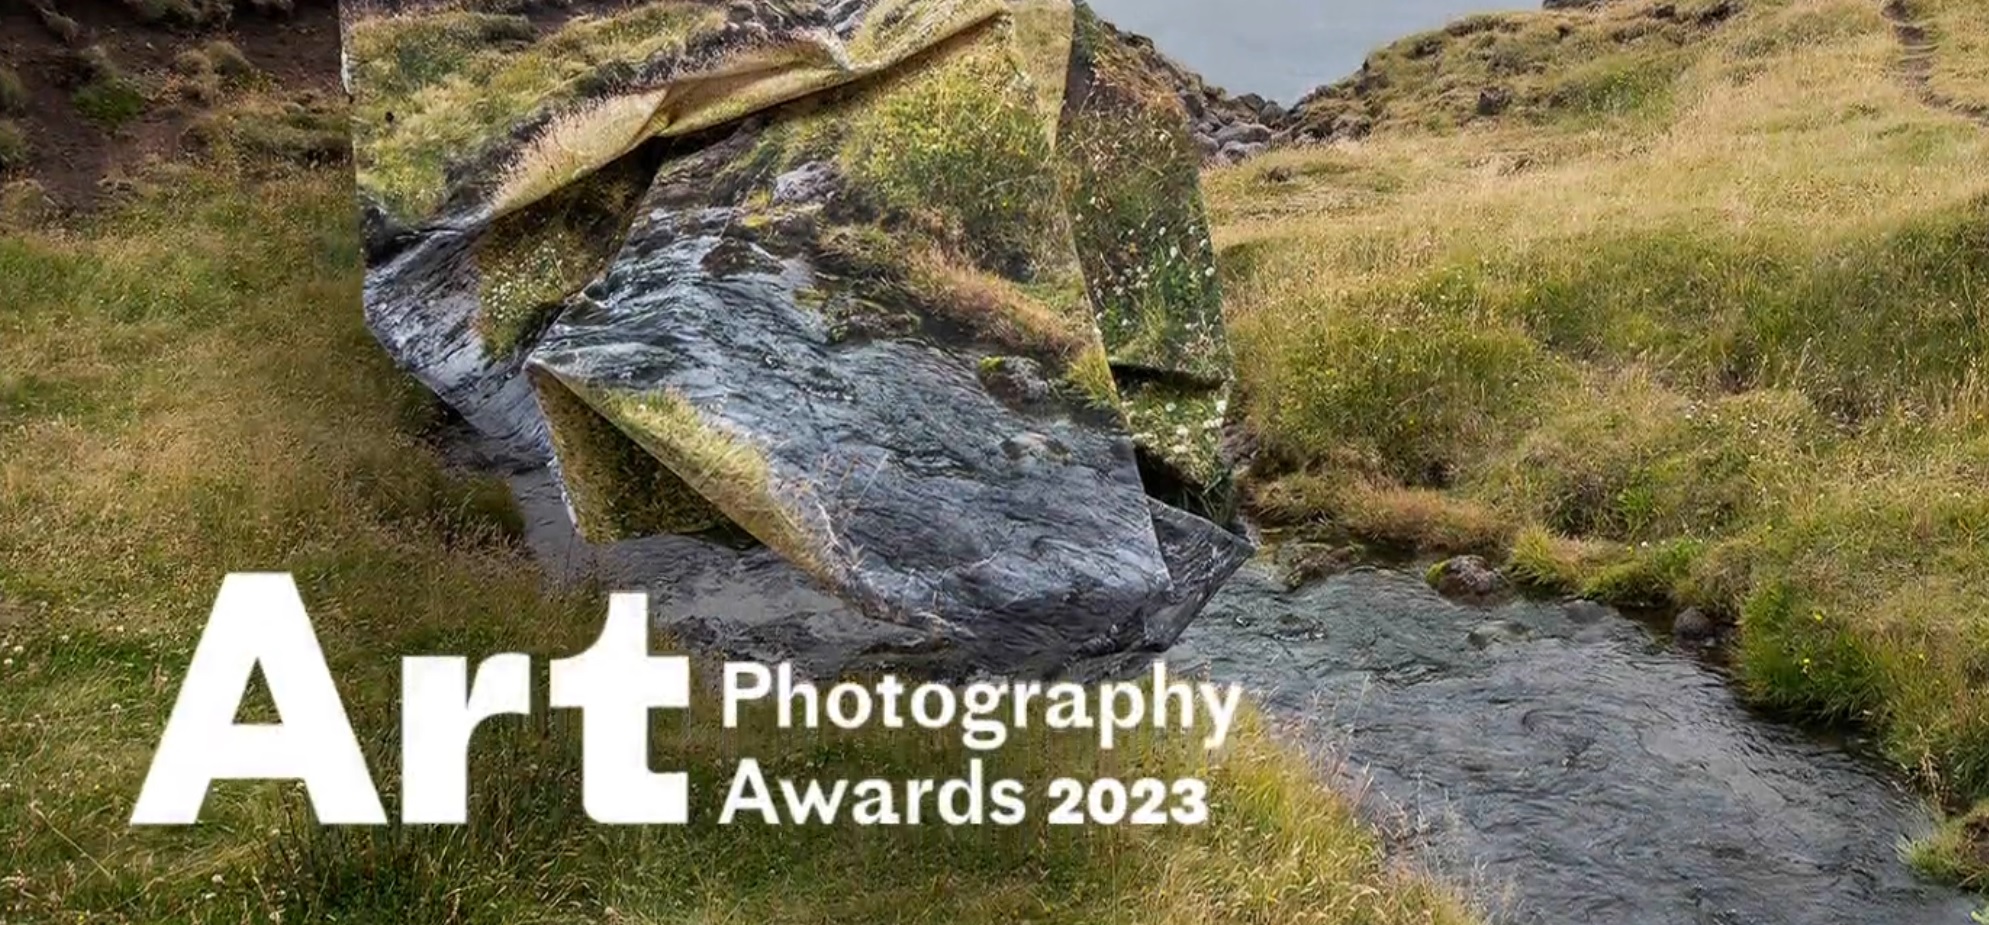 LensCulture Art Photography Awards 2023 - logo